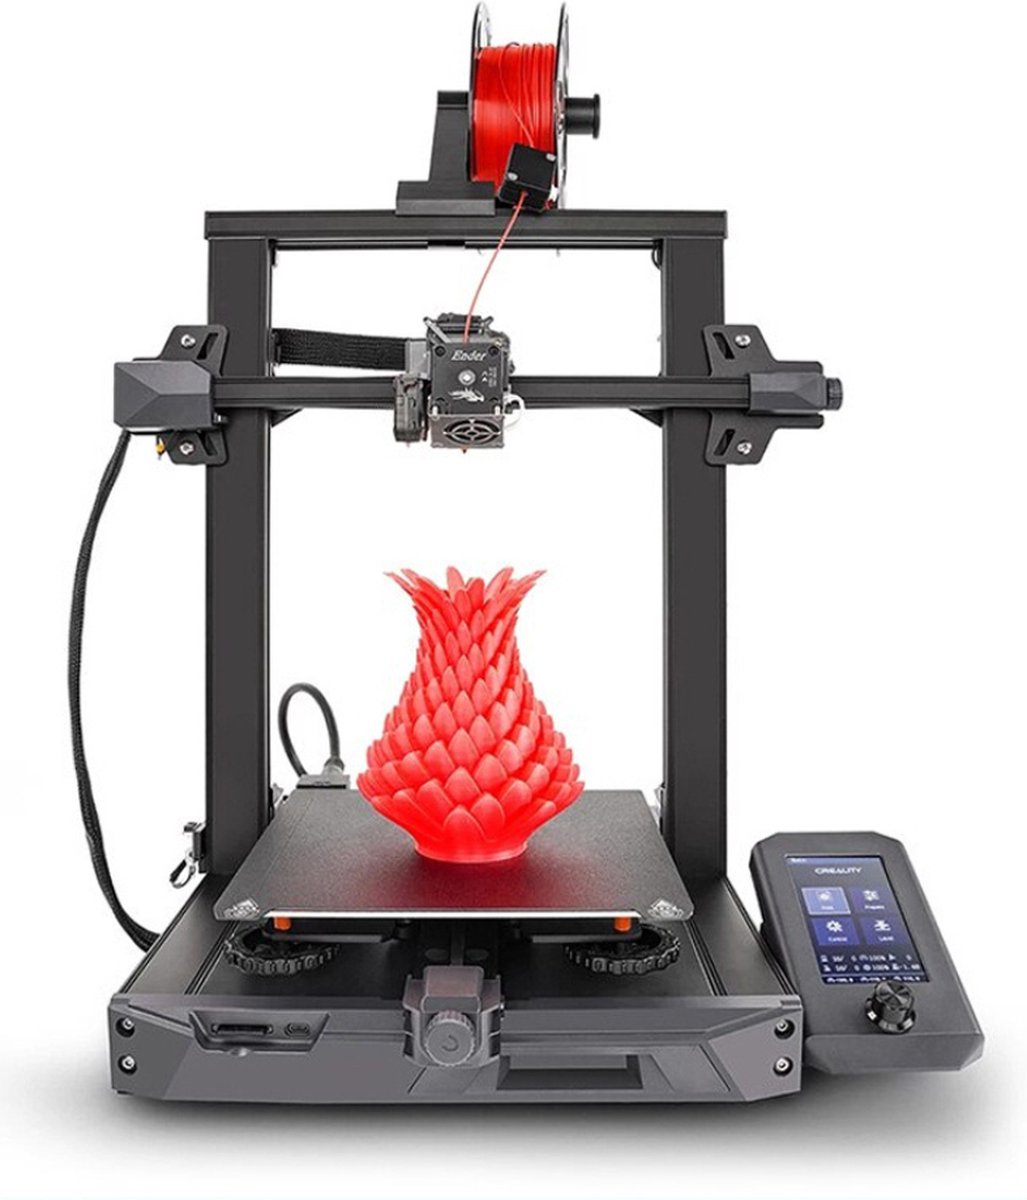 Bolture 3D Printer - Bouwpakket - Starterspakket - DIY - 220 x 220 x 250 mm - Inclusief 2 PLA Filament